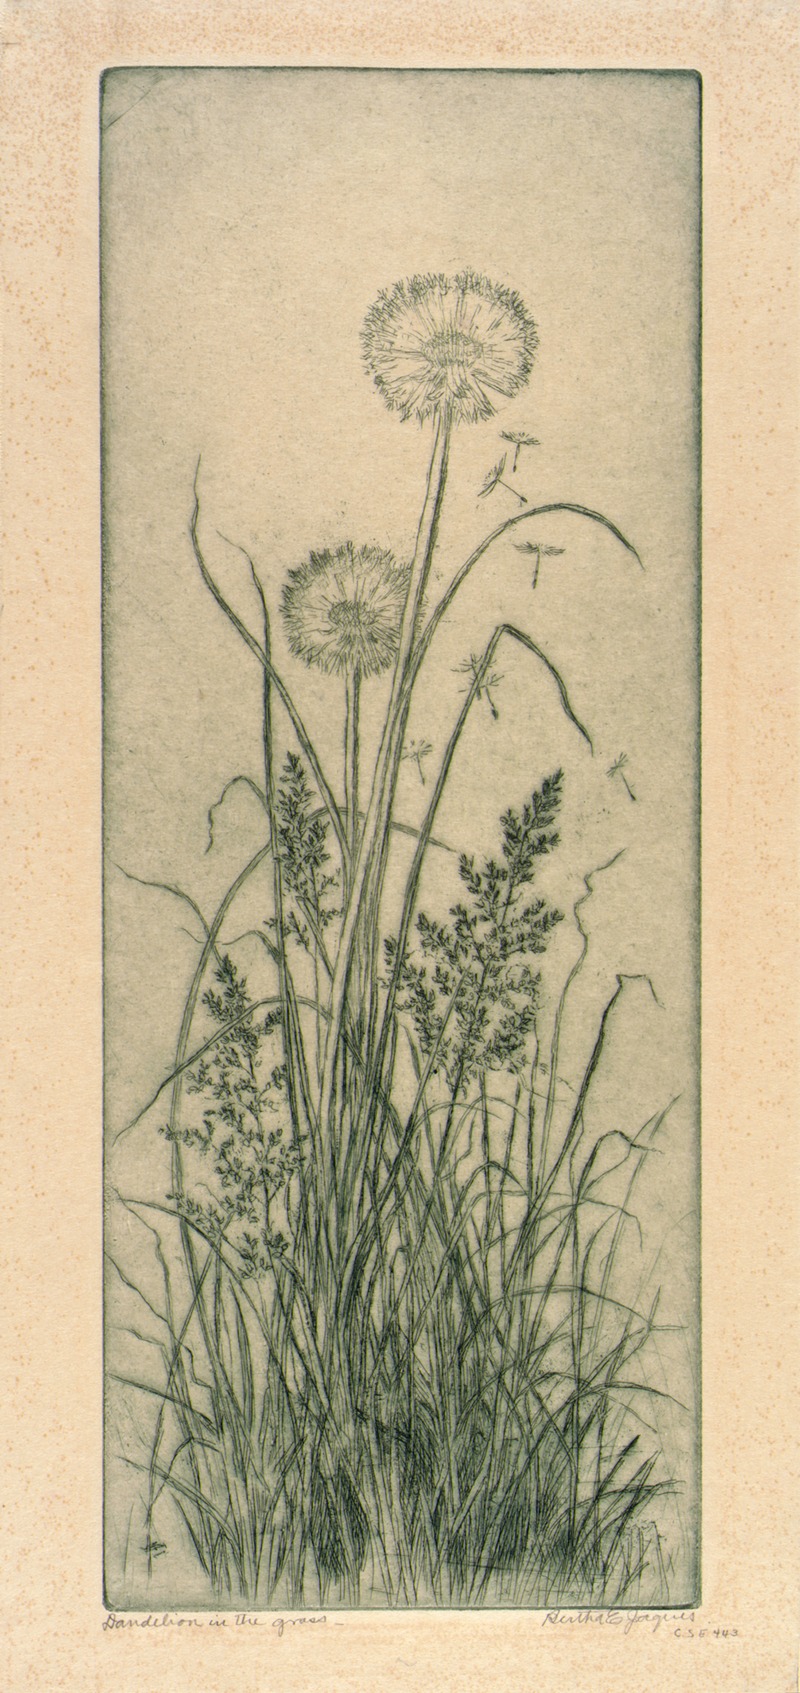 Bertha E. Jaques - Dandelion in the Grass